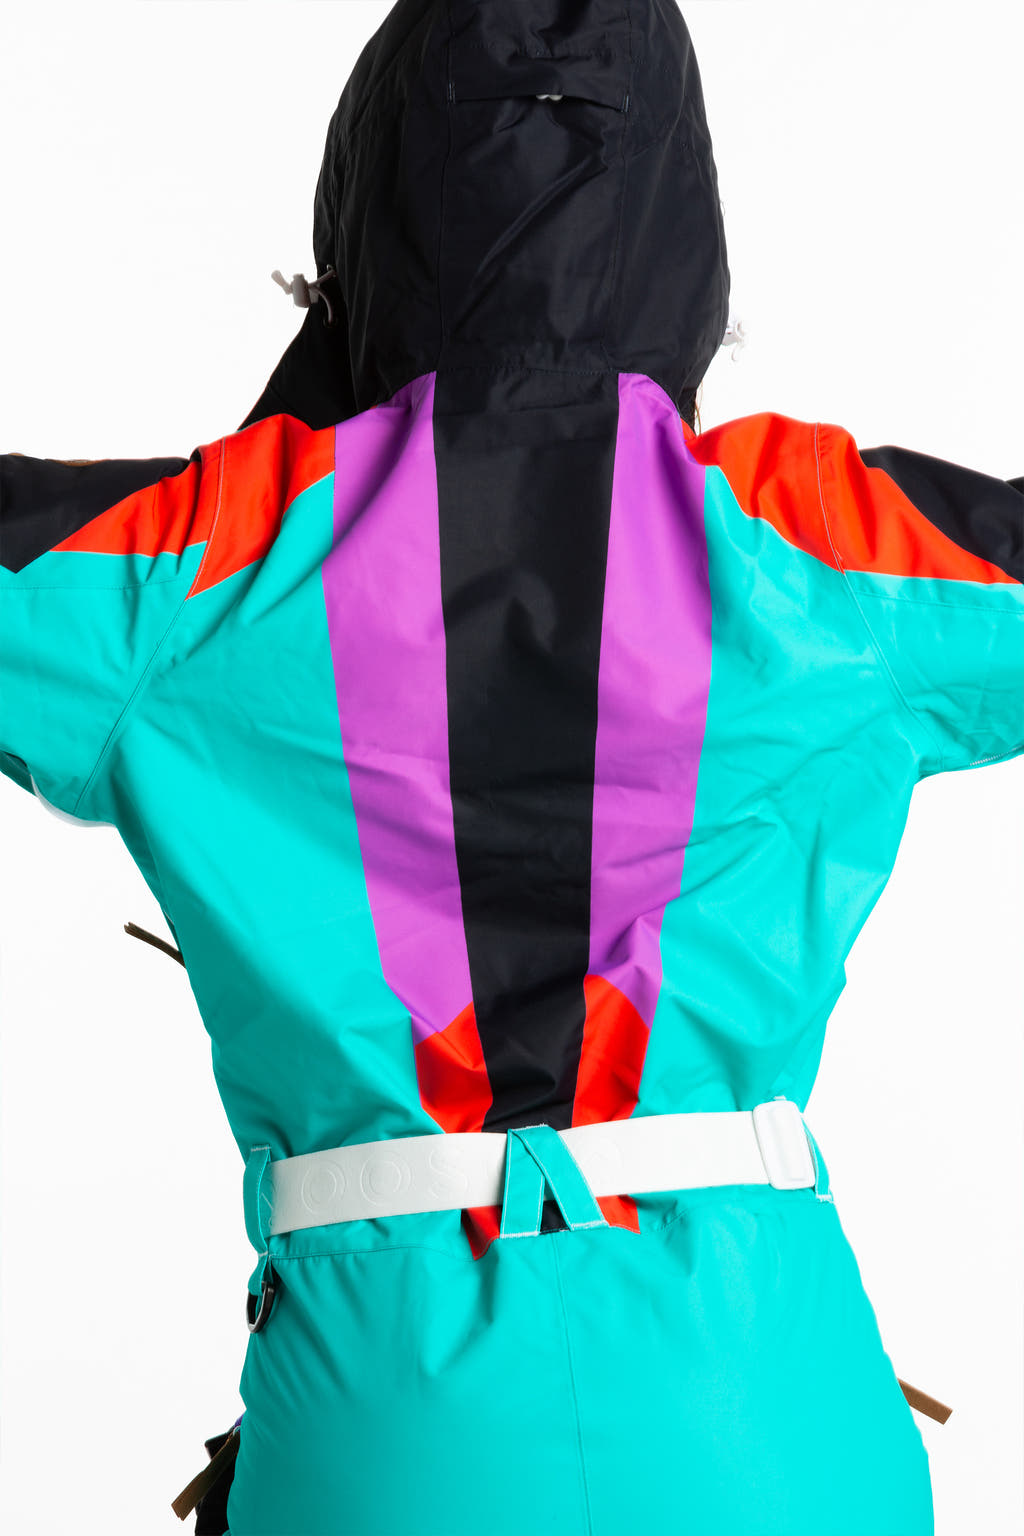 Neon Pattern Ski Suit